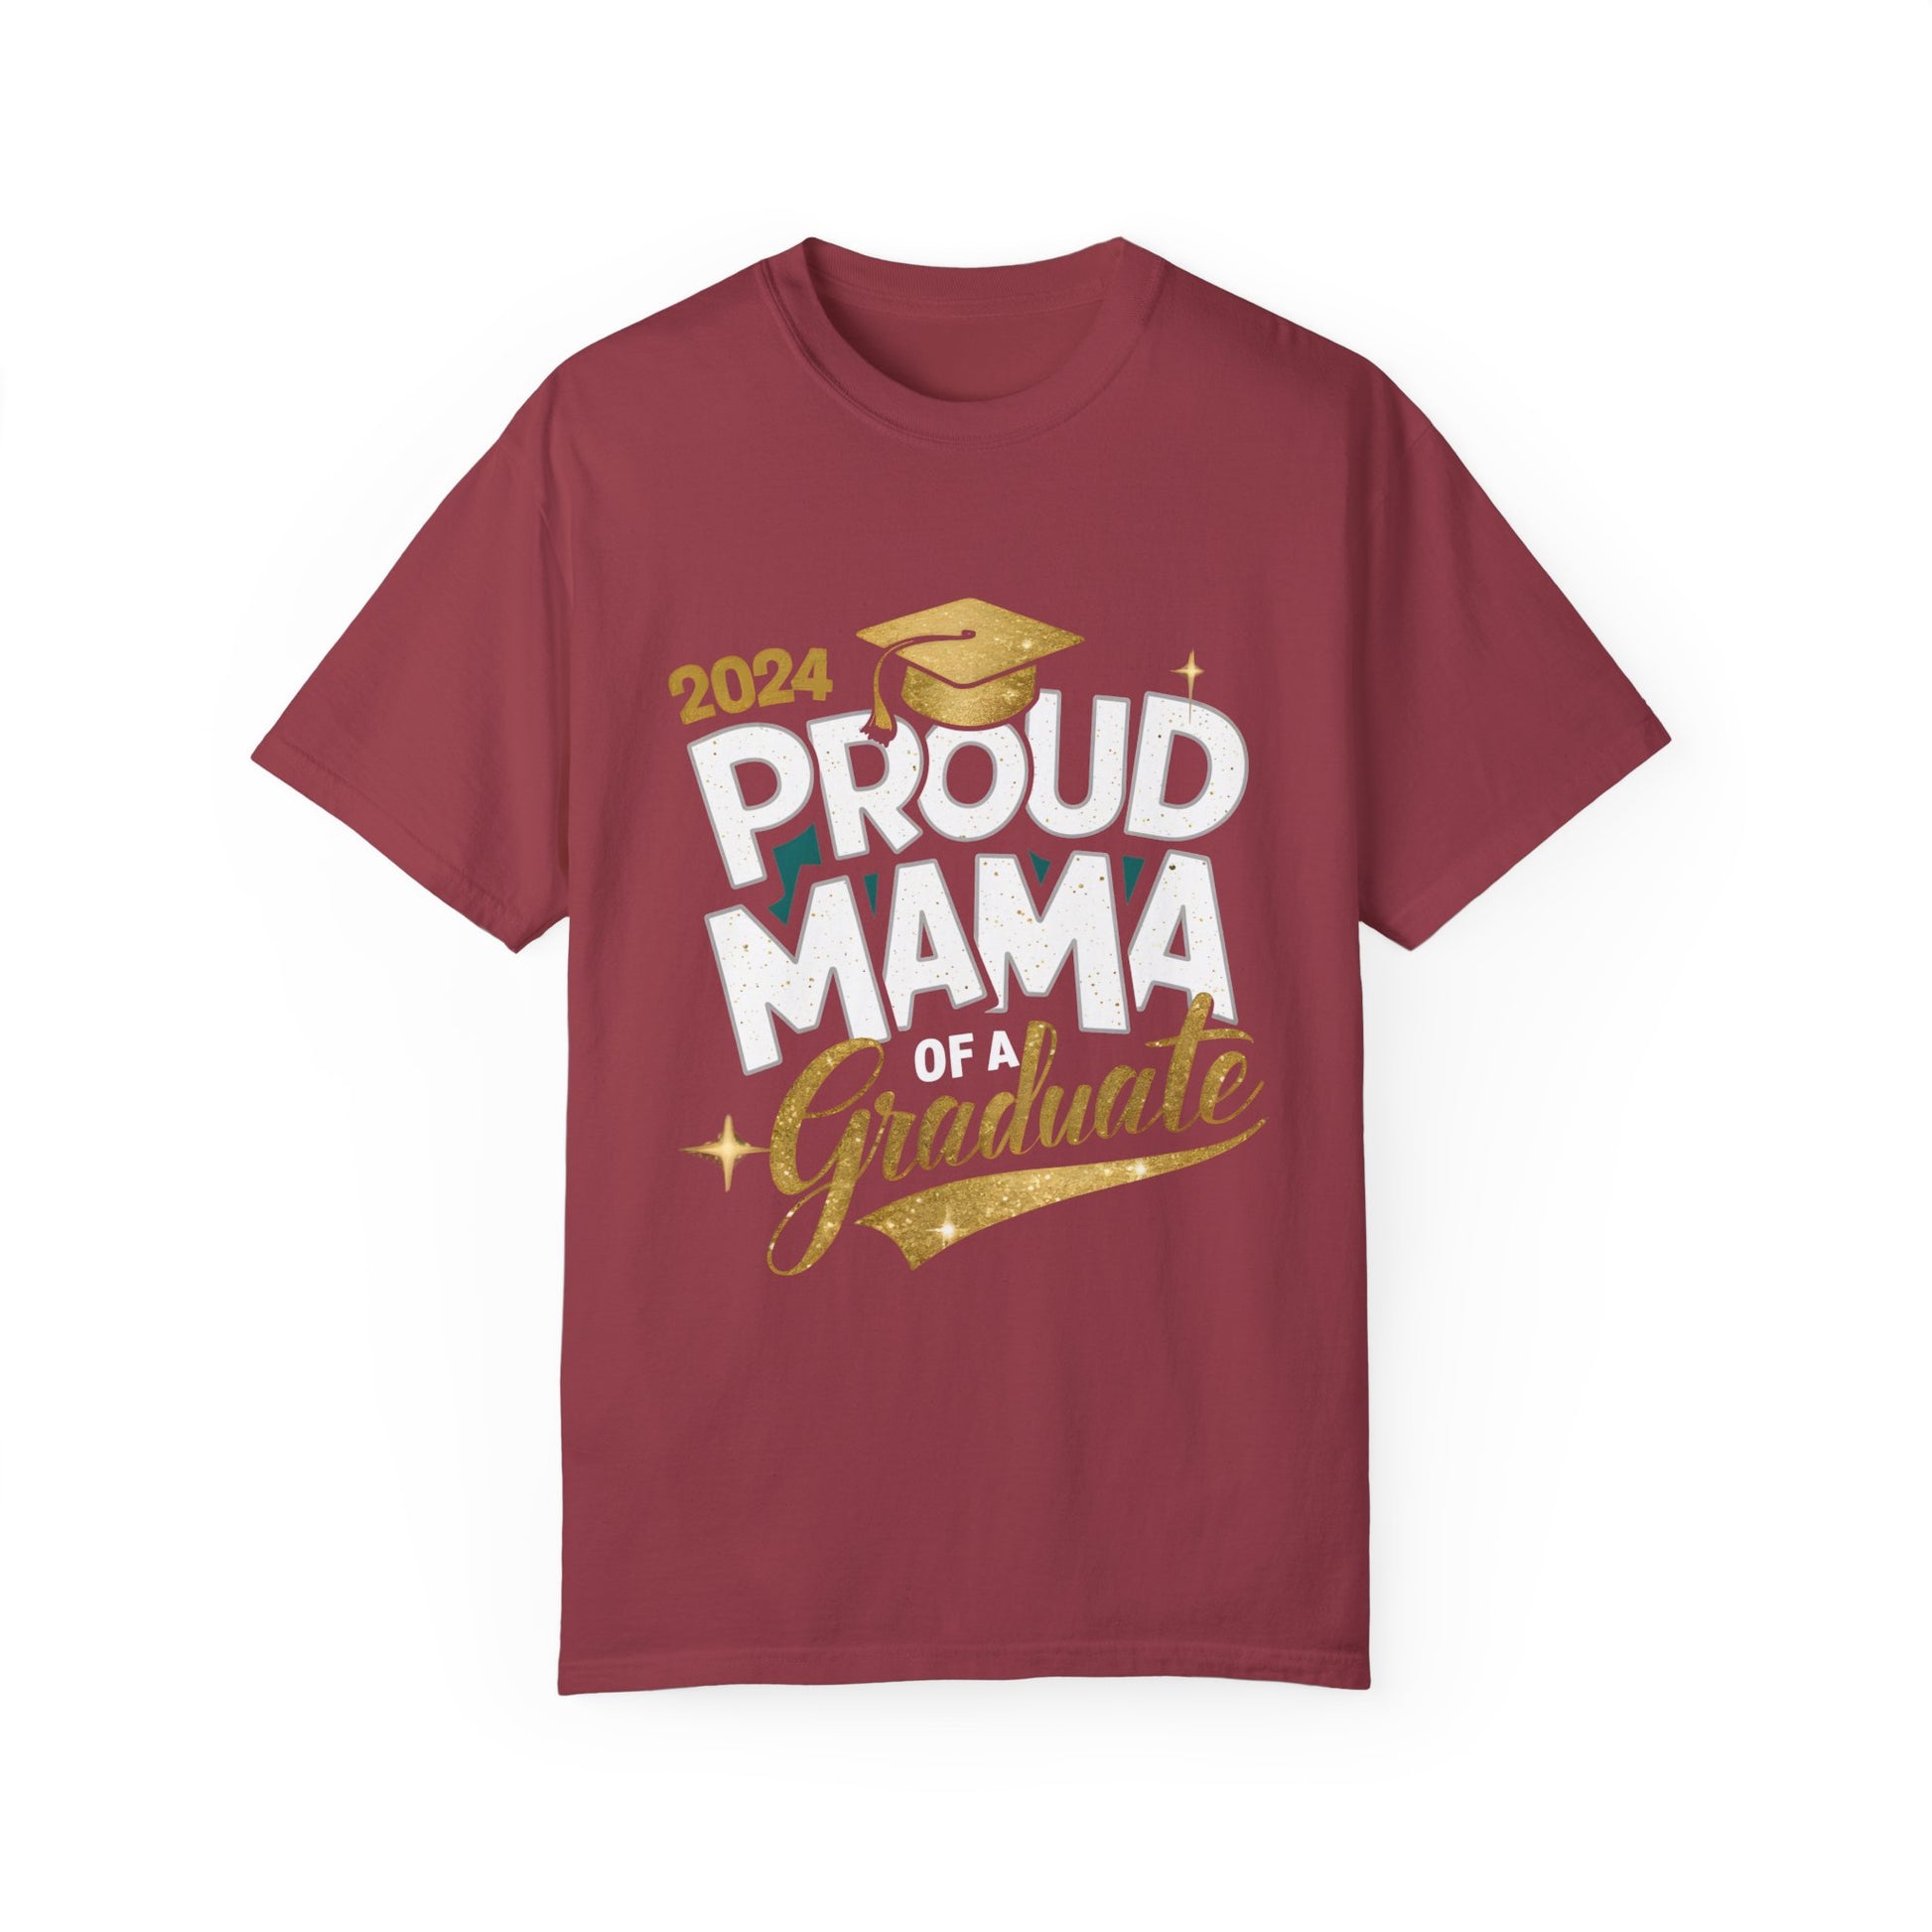 Proud Mama of a 2024 Graduate Unisex Garment-dyed T-shirt Cotton Funny Humorous Graphic Soft Premium Unisex Men Women Chili T-shirt Birthday Gift-7